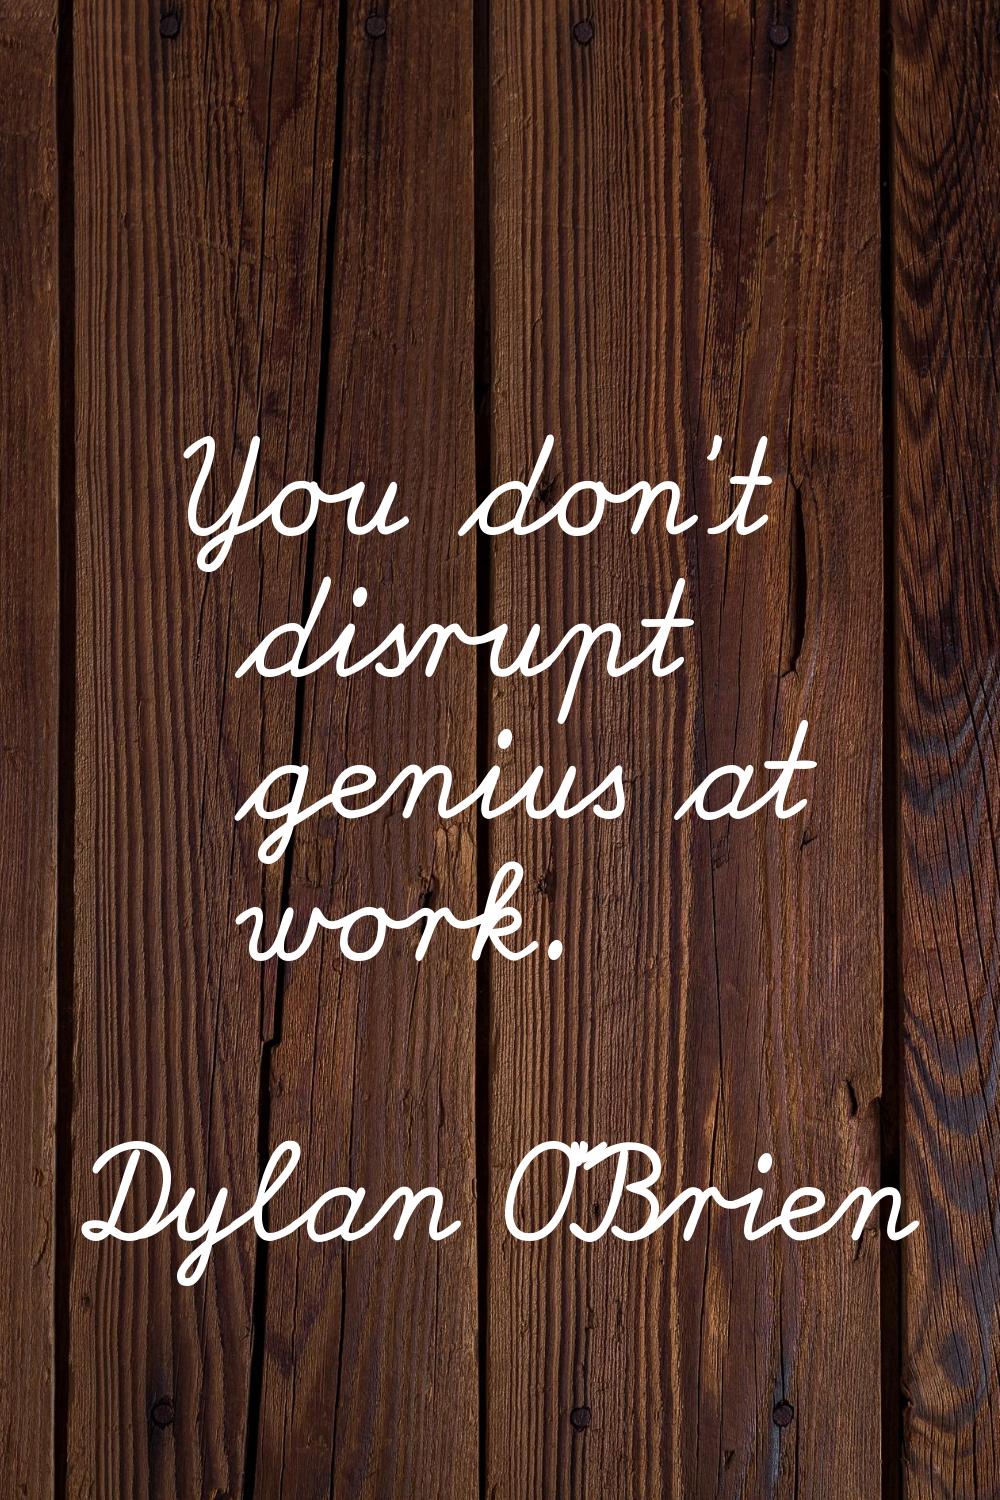 You don't disrupt genius at work.